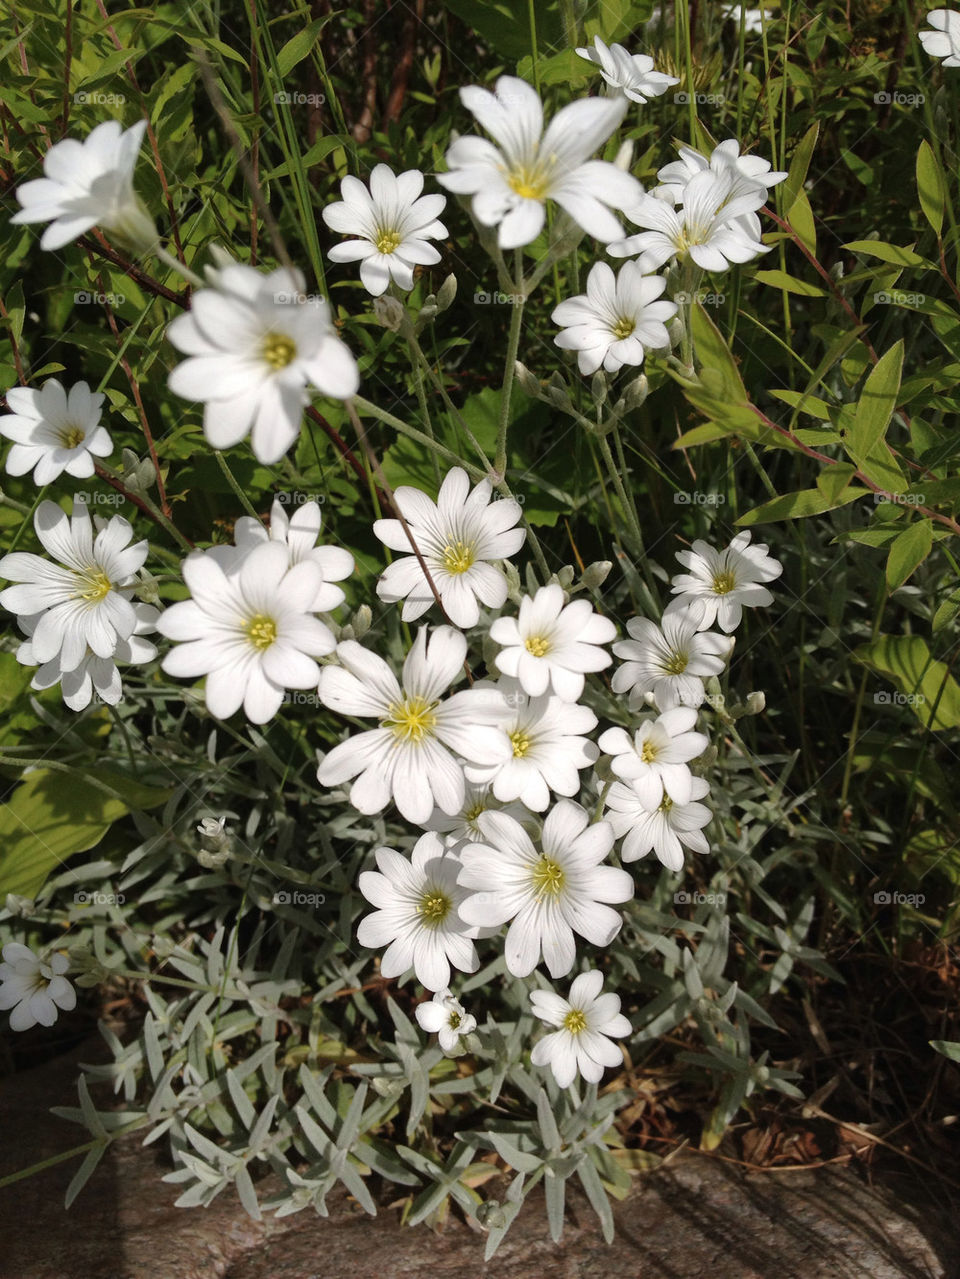 sweden garden flower white by casperlo